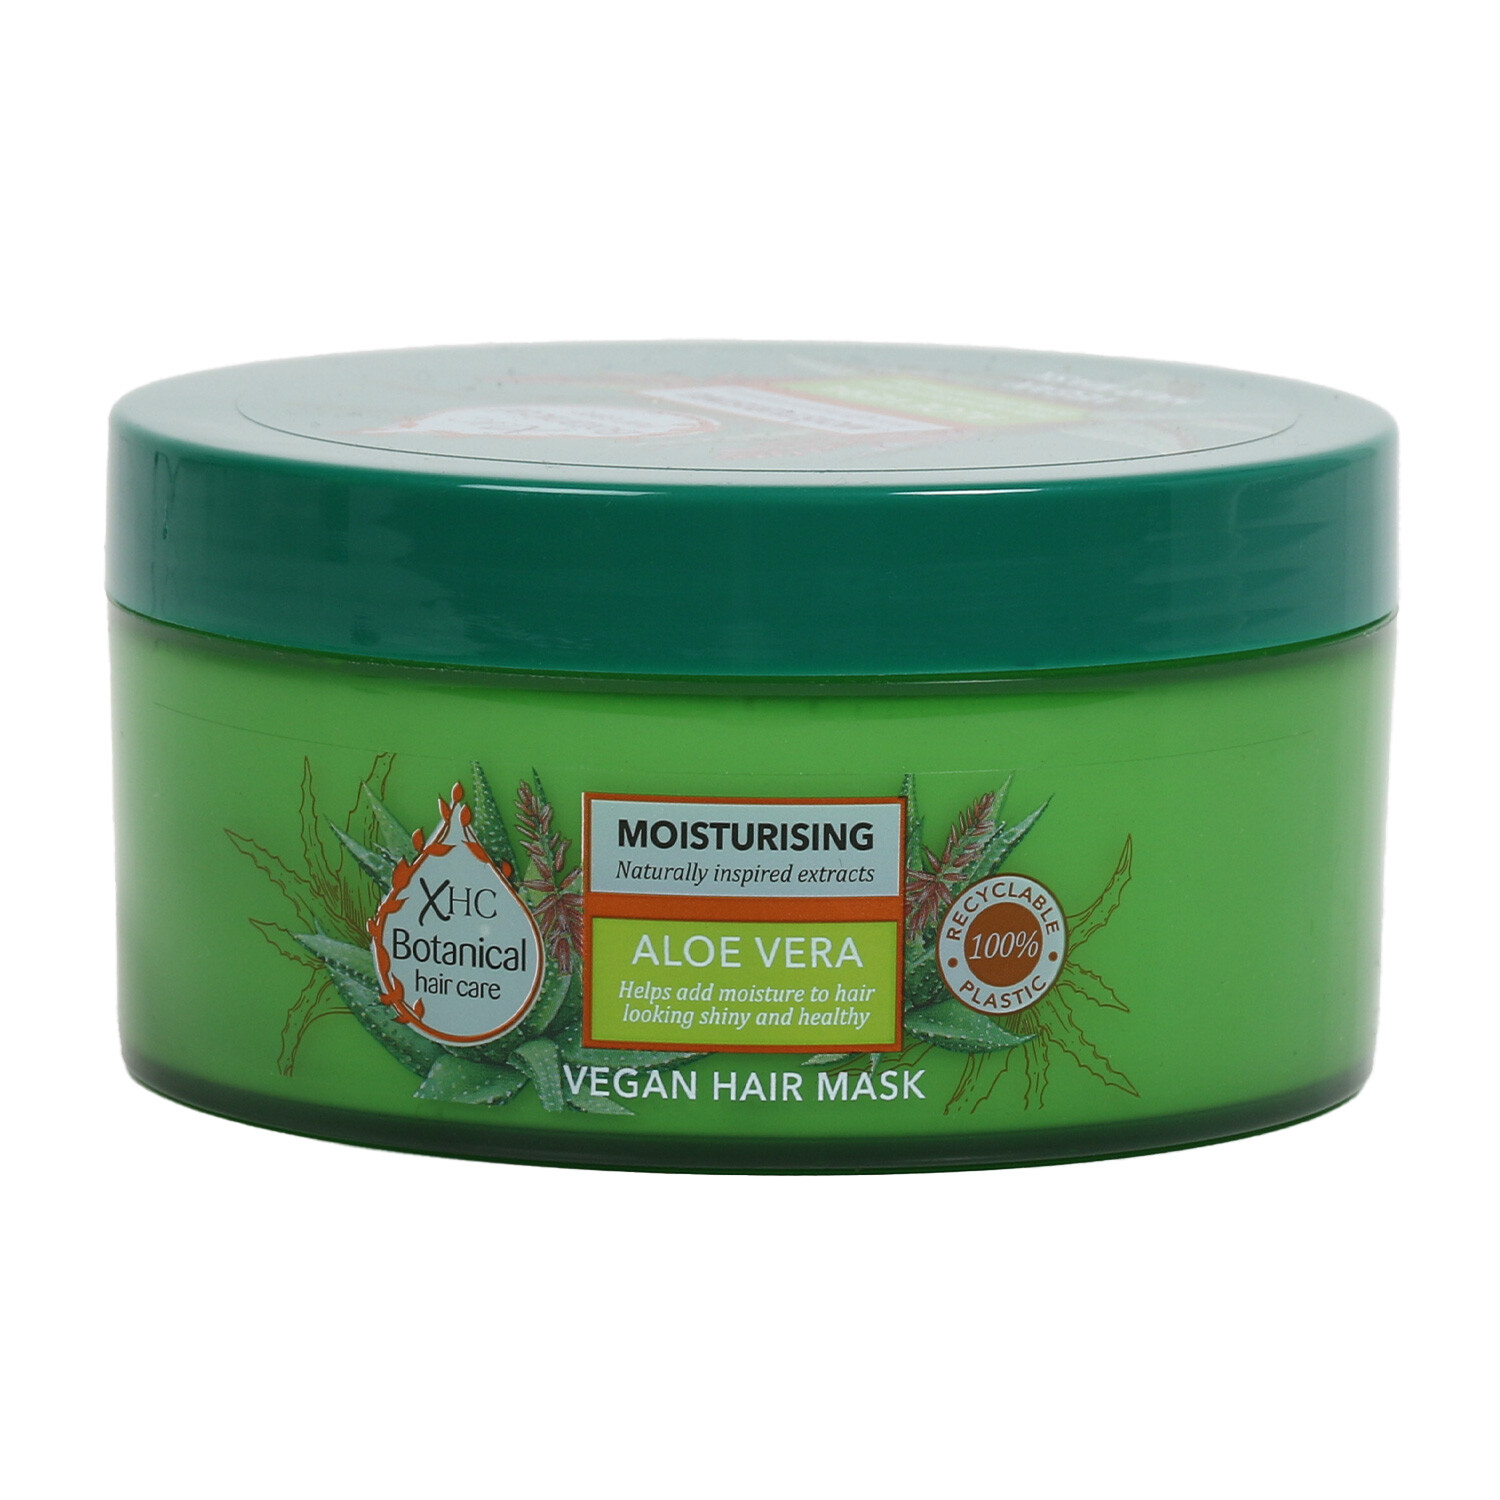 Botanical Aloe Vera Hair Mask - Green Image 1